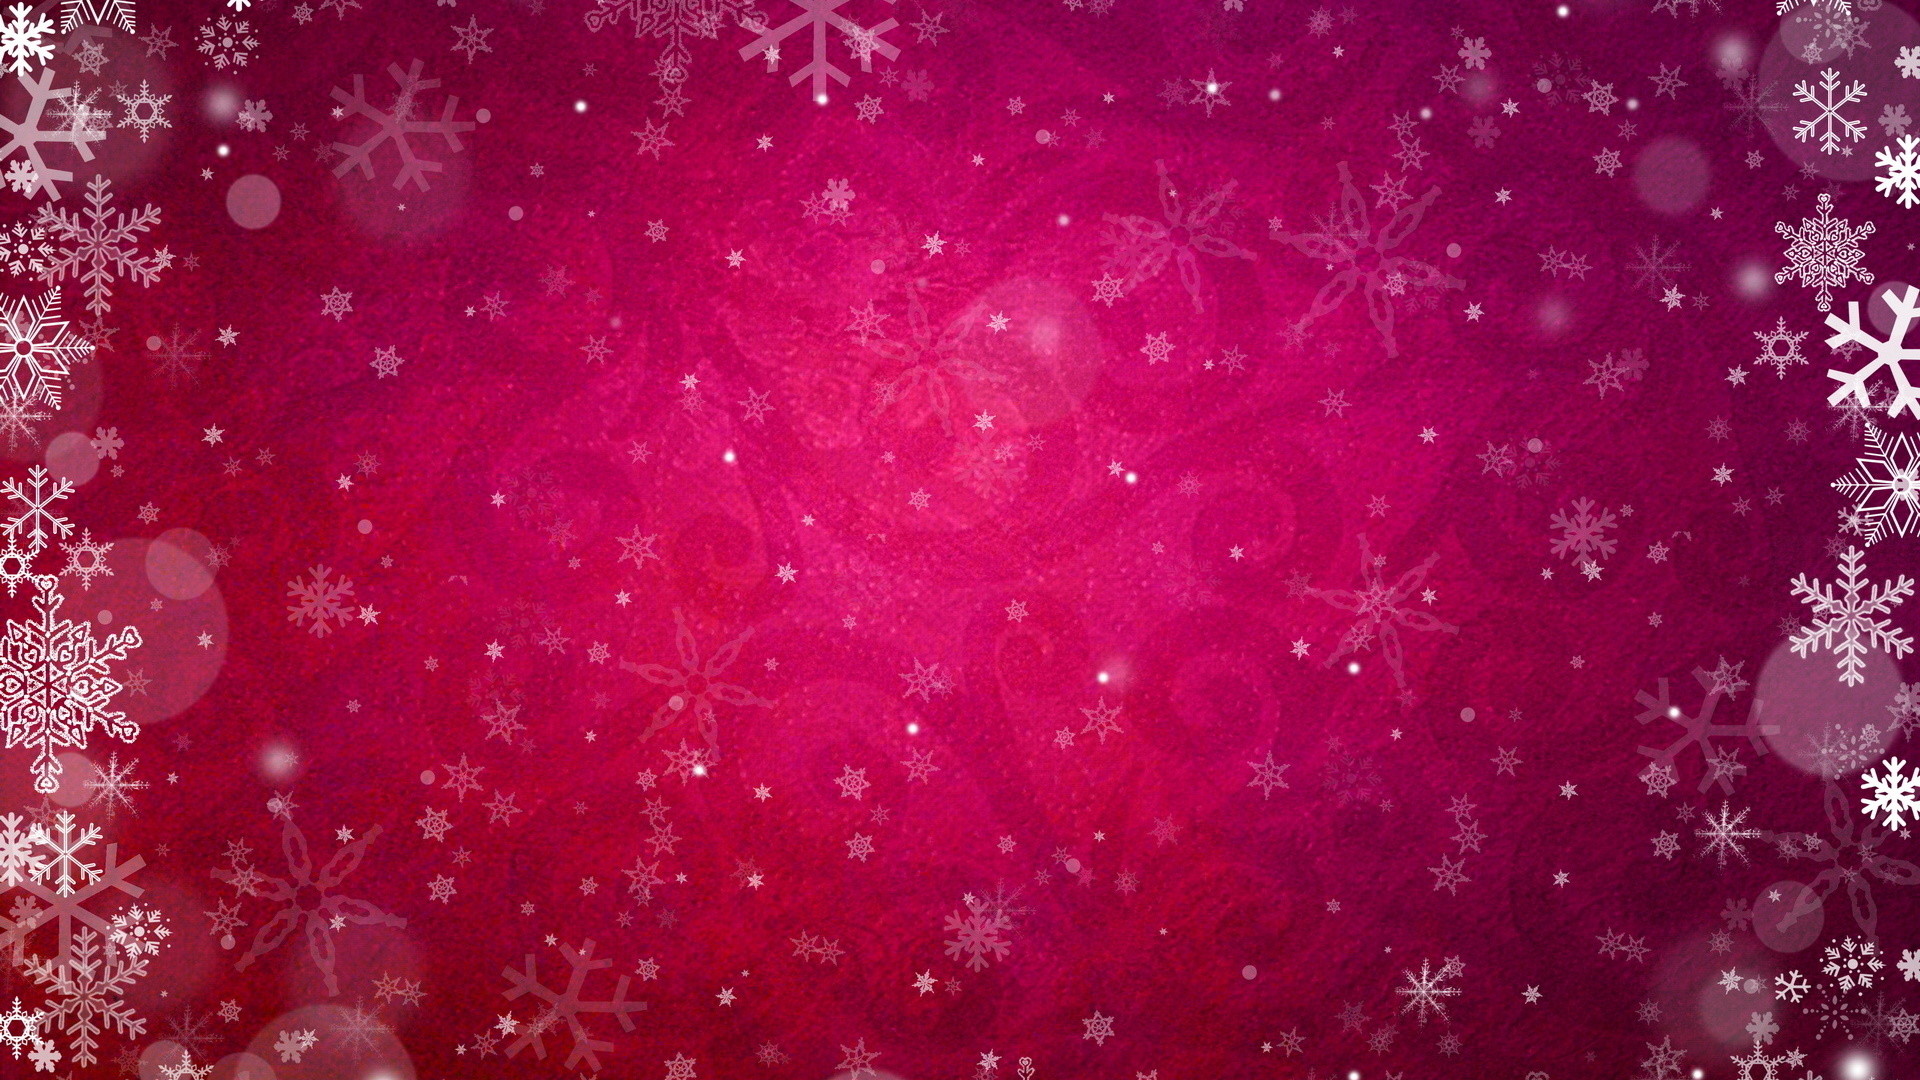 1920x1080 Pink Snowflake Wallpaper Free Download